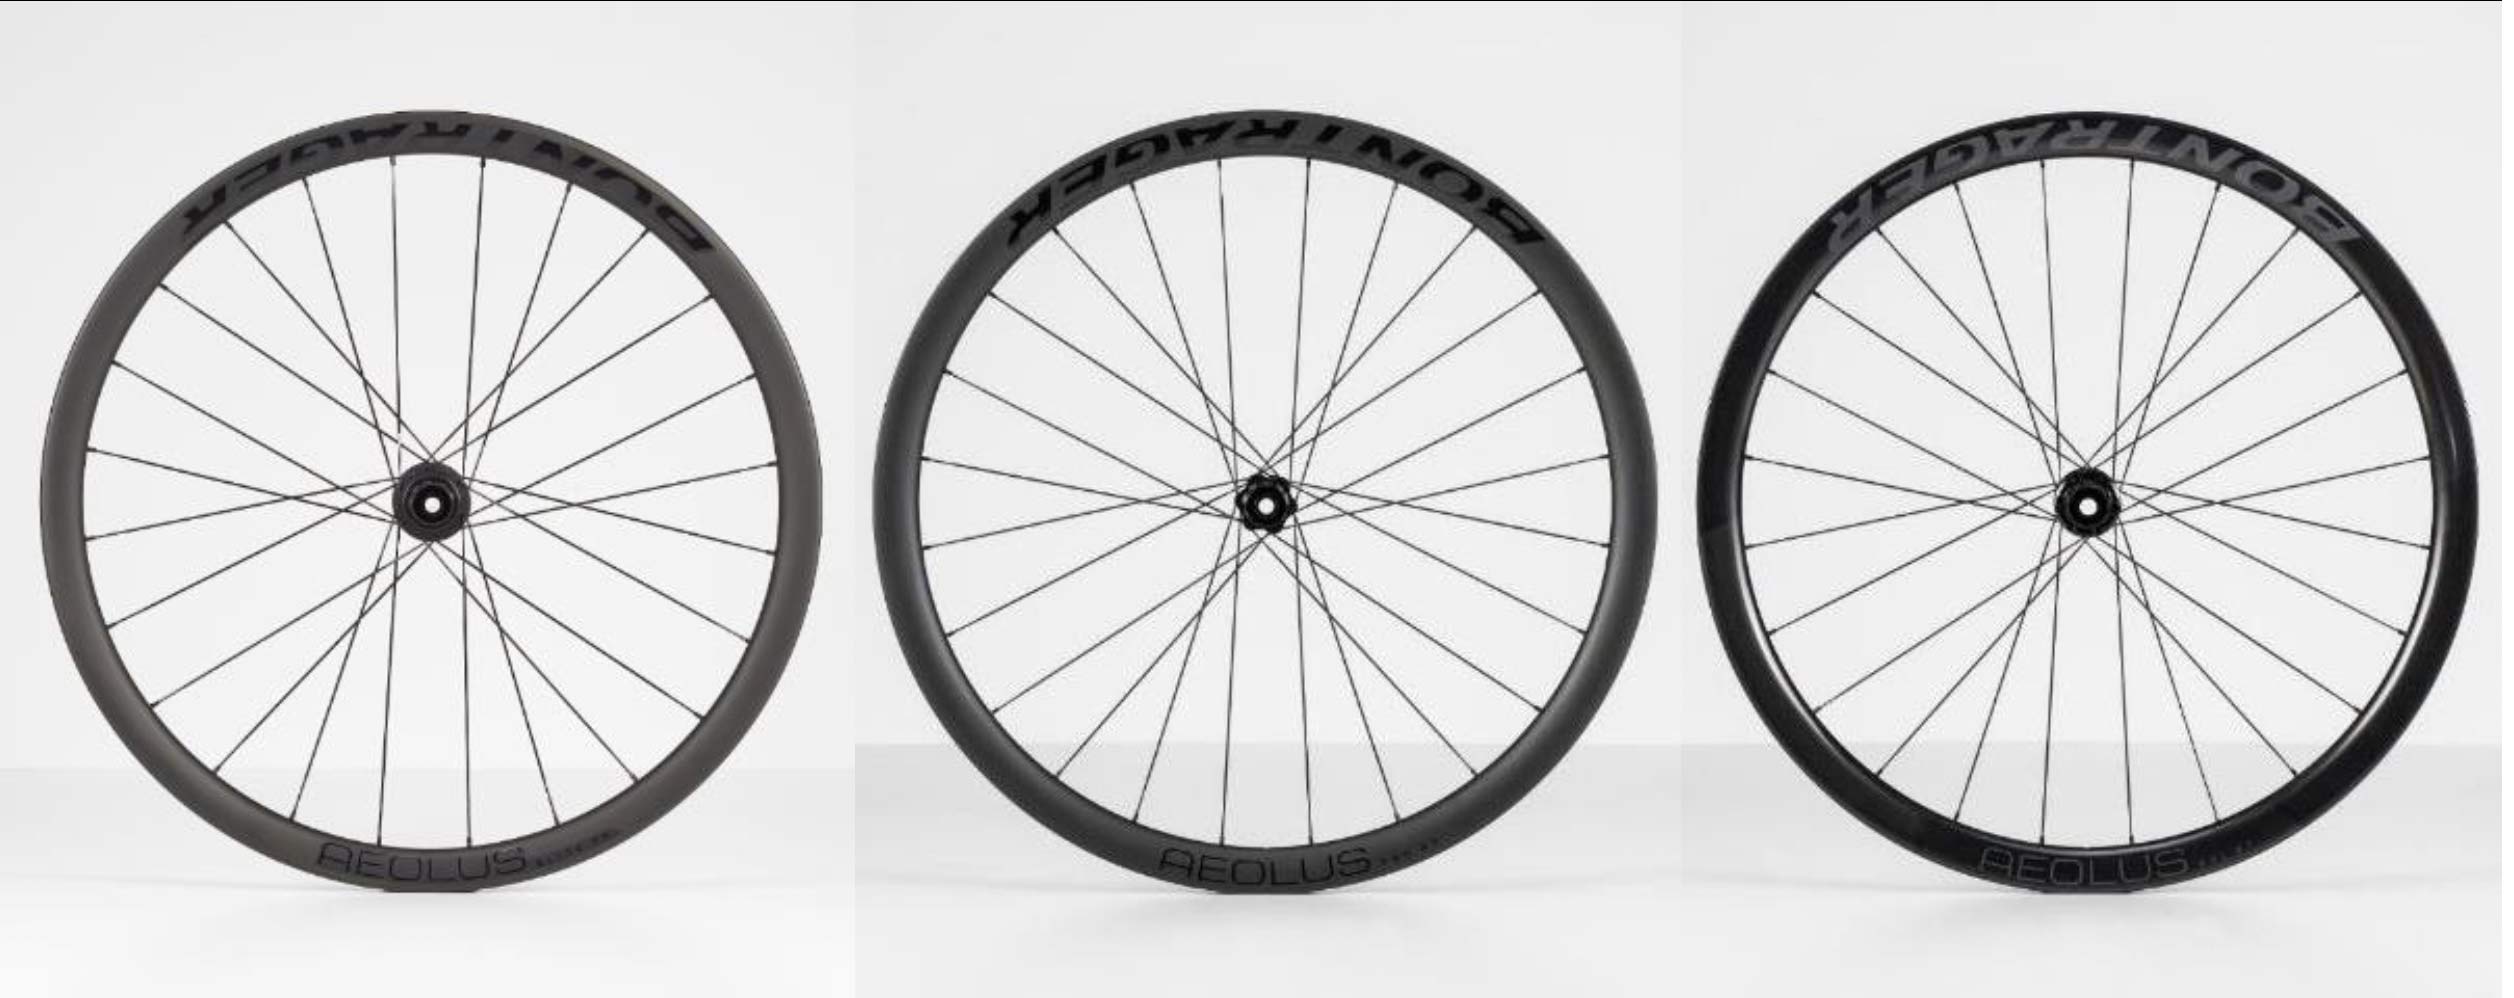 2021 bontrager aeolus carbon fiber road bike wheels lineup